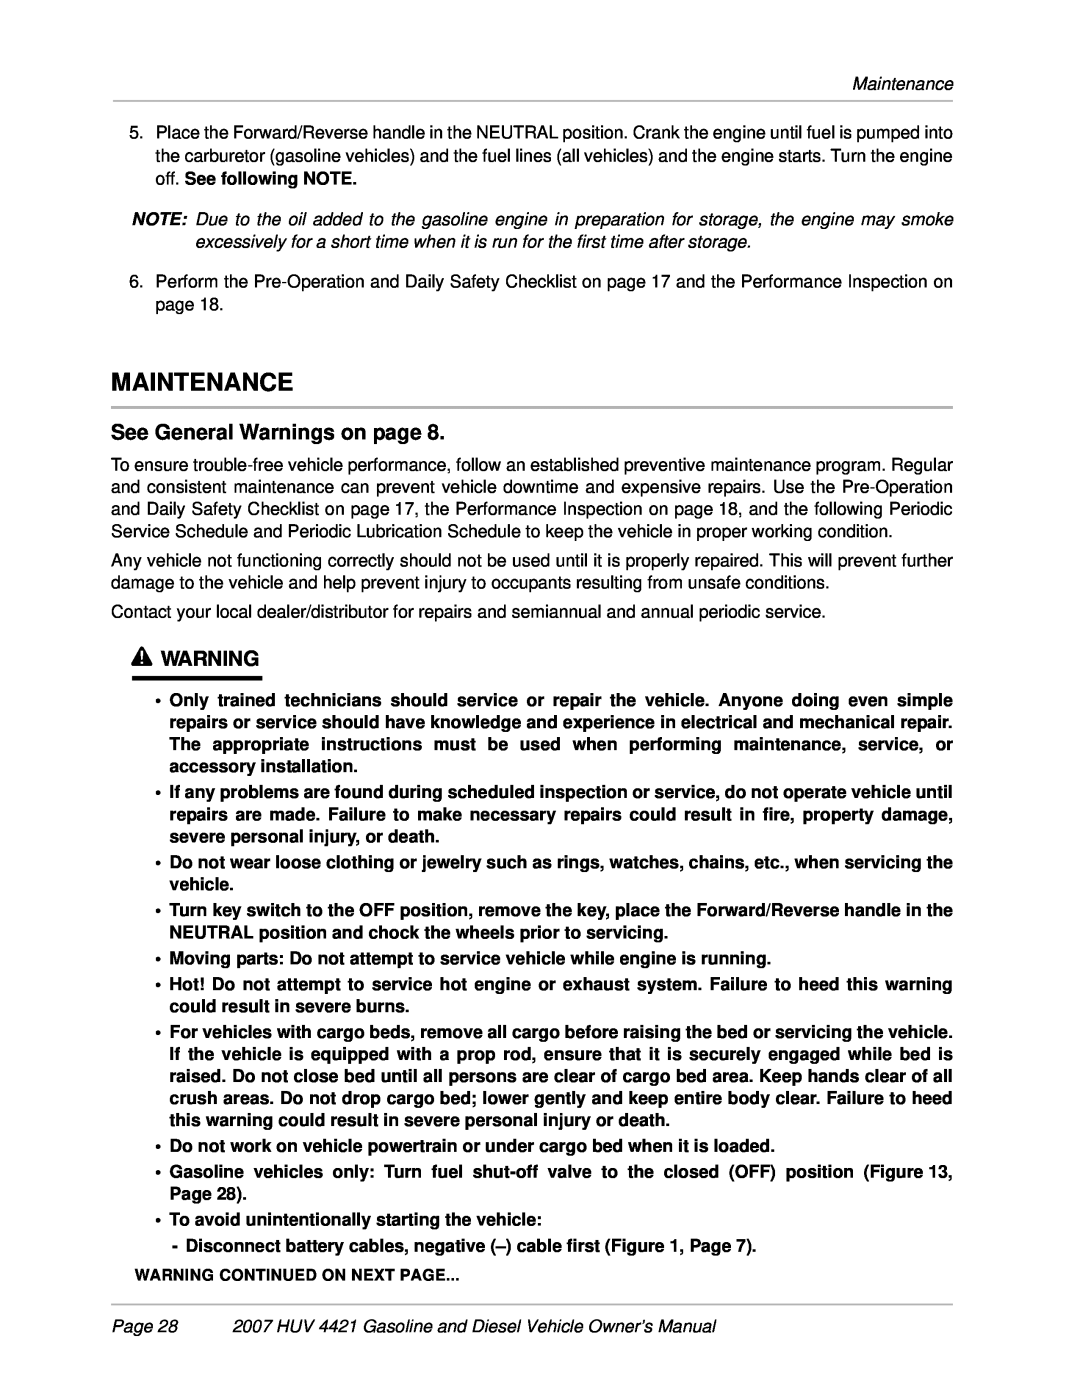 Husqvarna HUV 4421-G / GXP Maintenance, Page 28 2007 HUV 4421 Gasoline and Diesel Vehicle Owner’s Manual, ý WARNING 